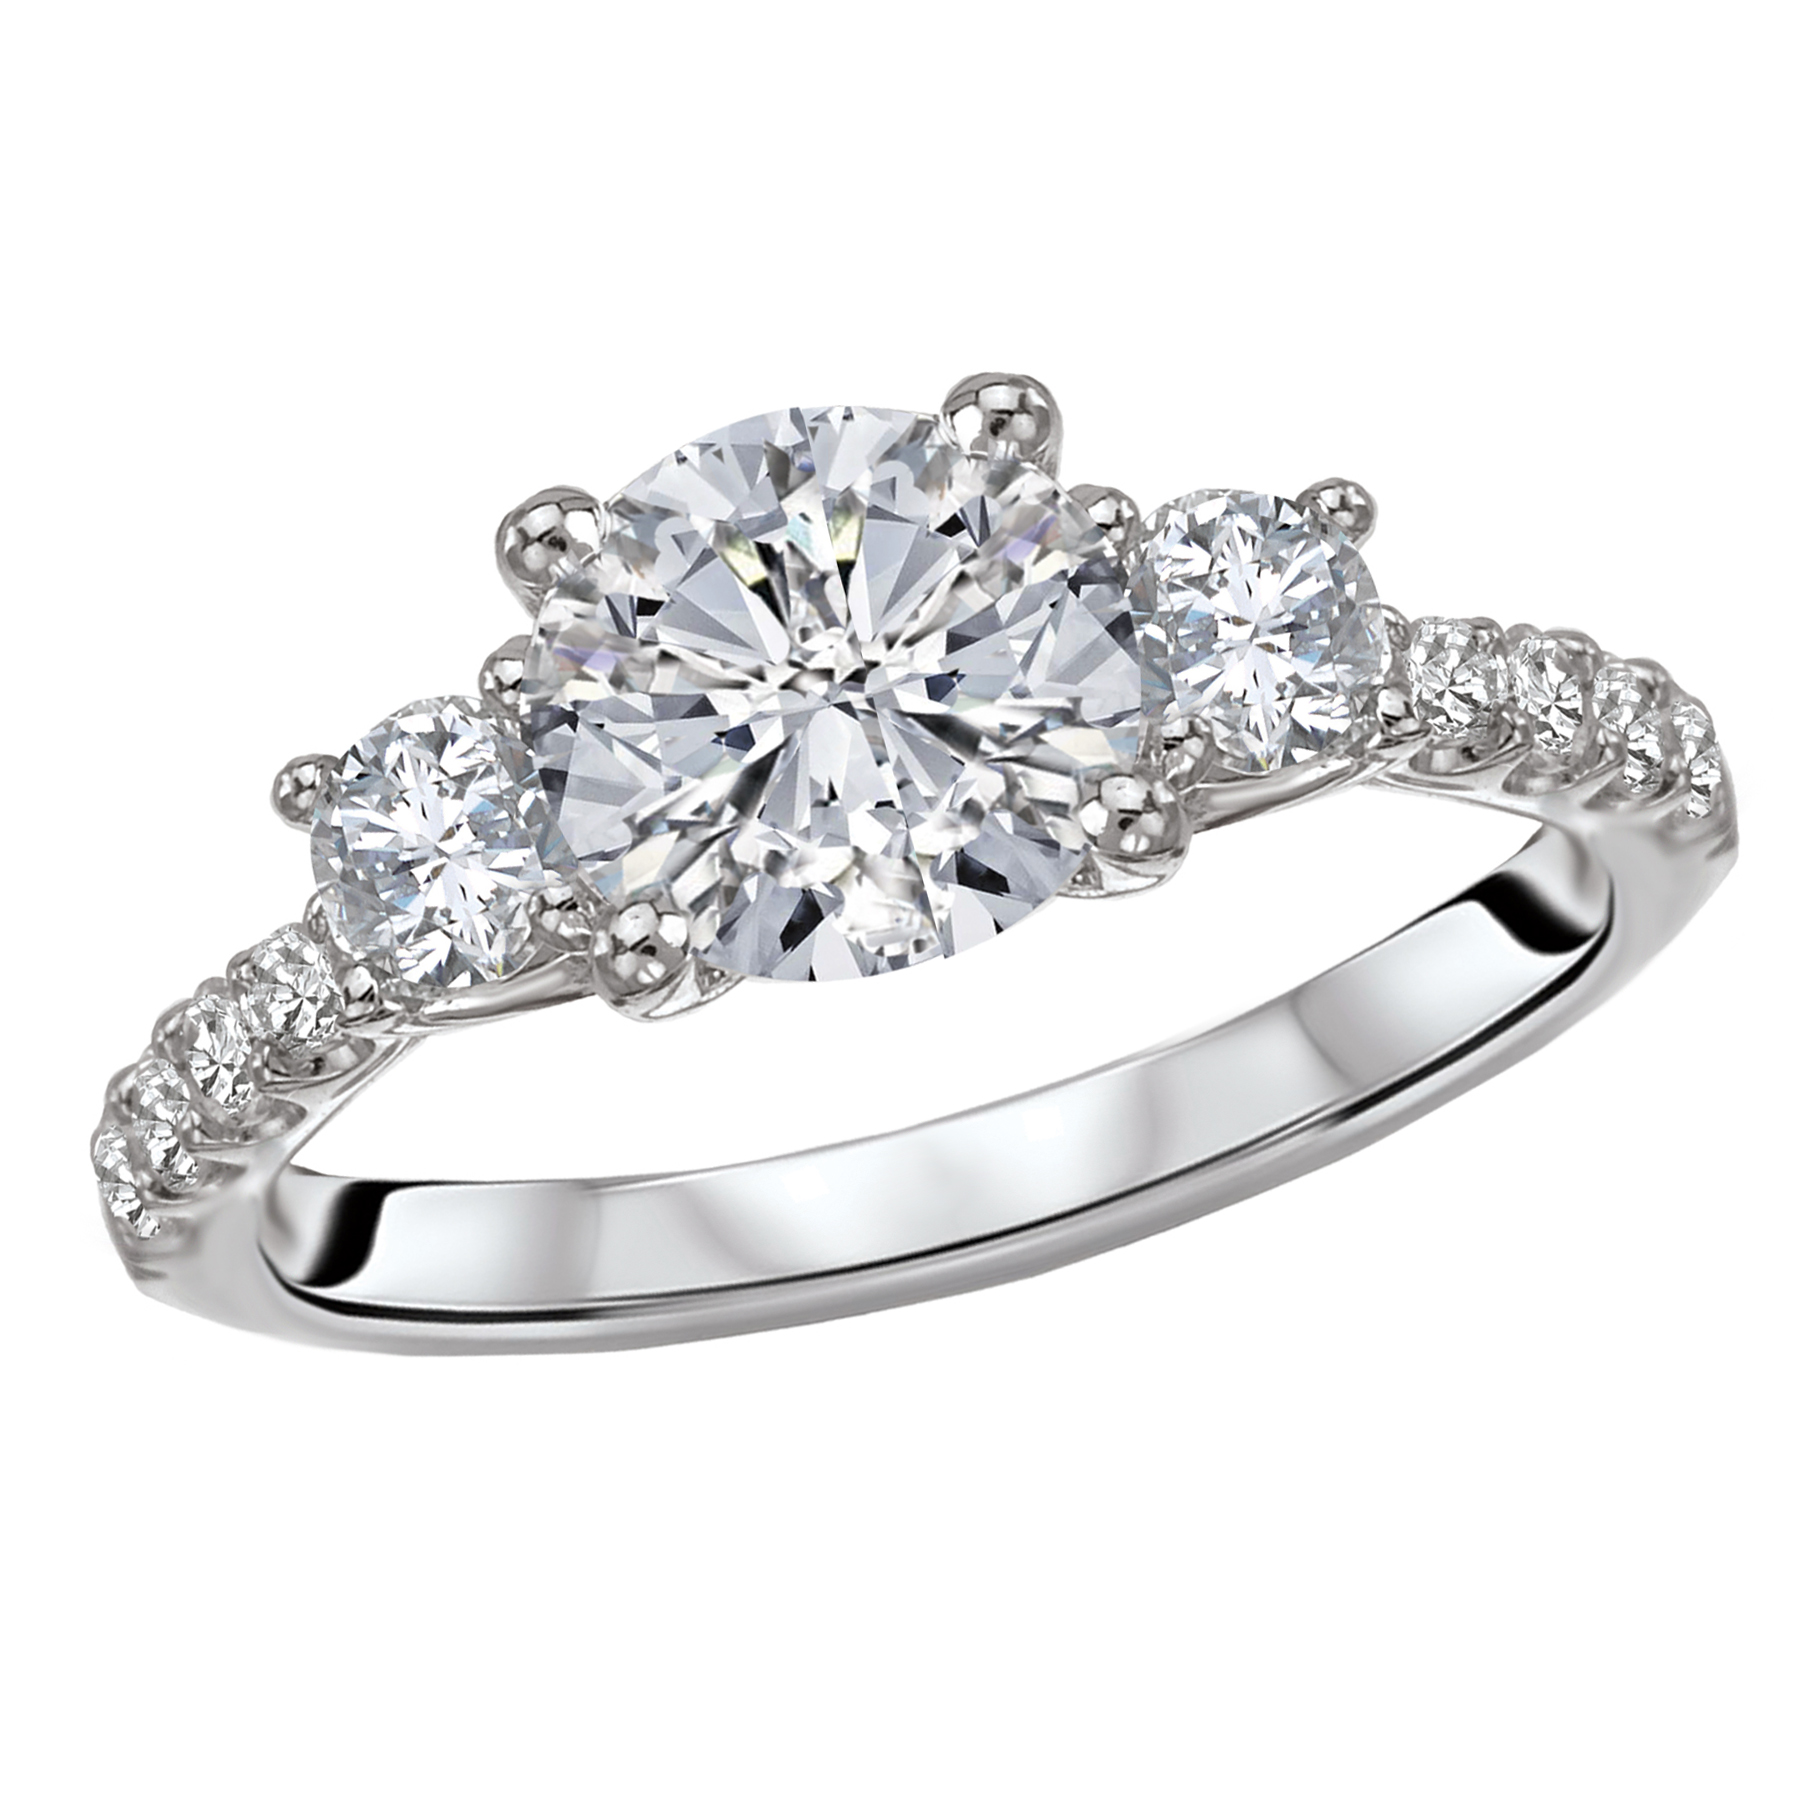 Three Stone Diamond Engagement Ring with Diamond Shank | Kranich's Inc